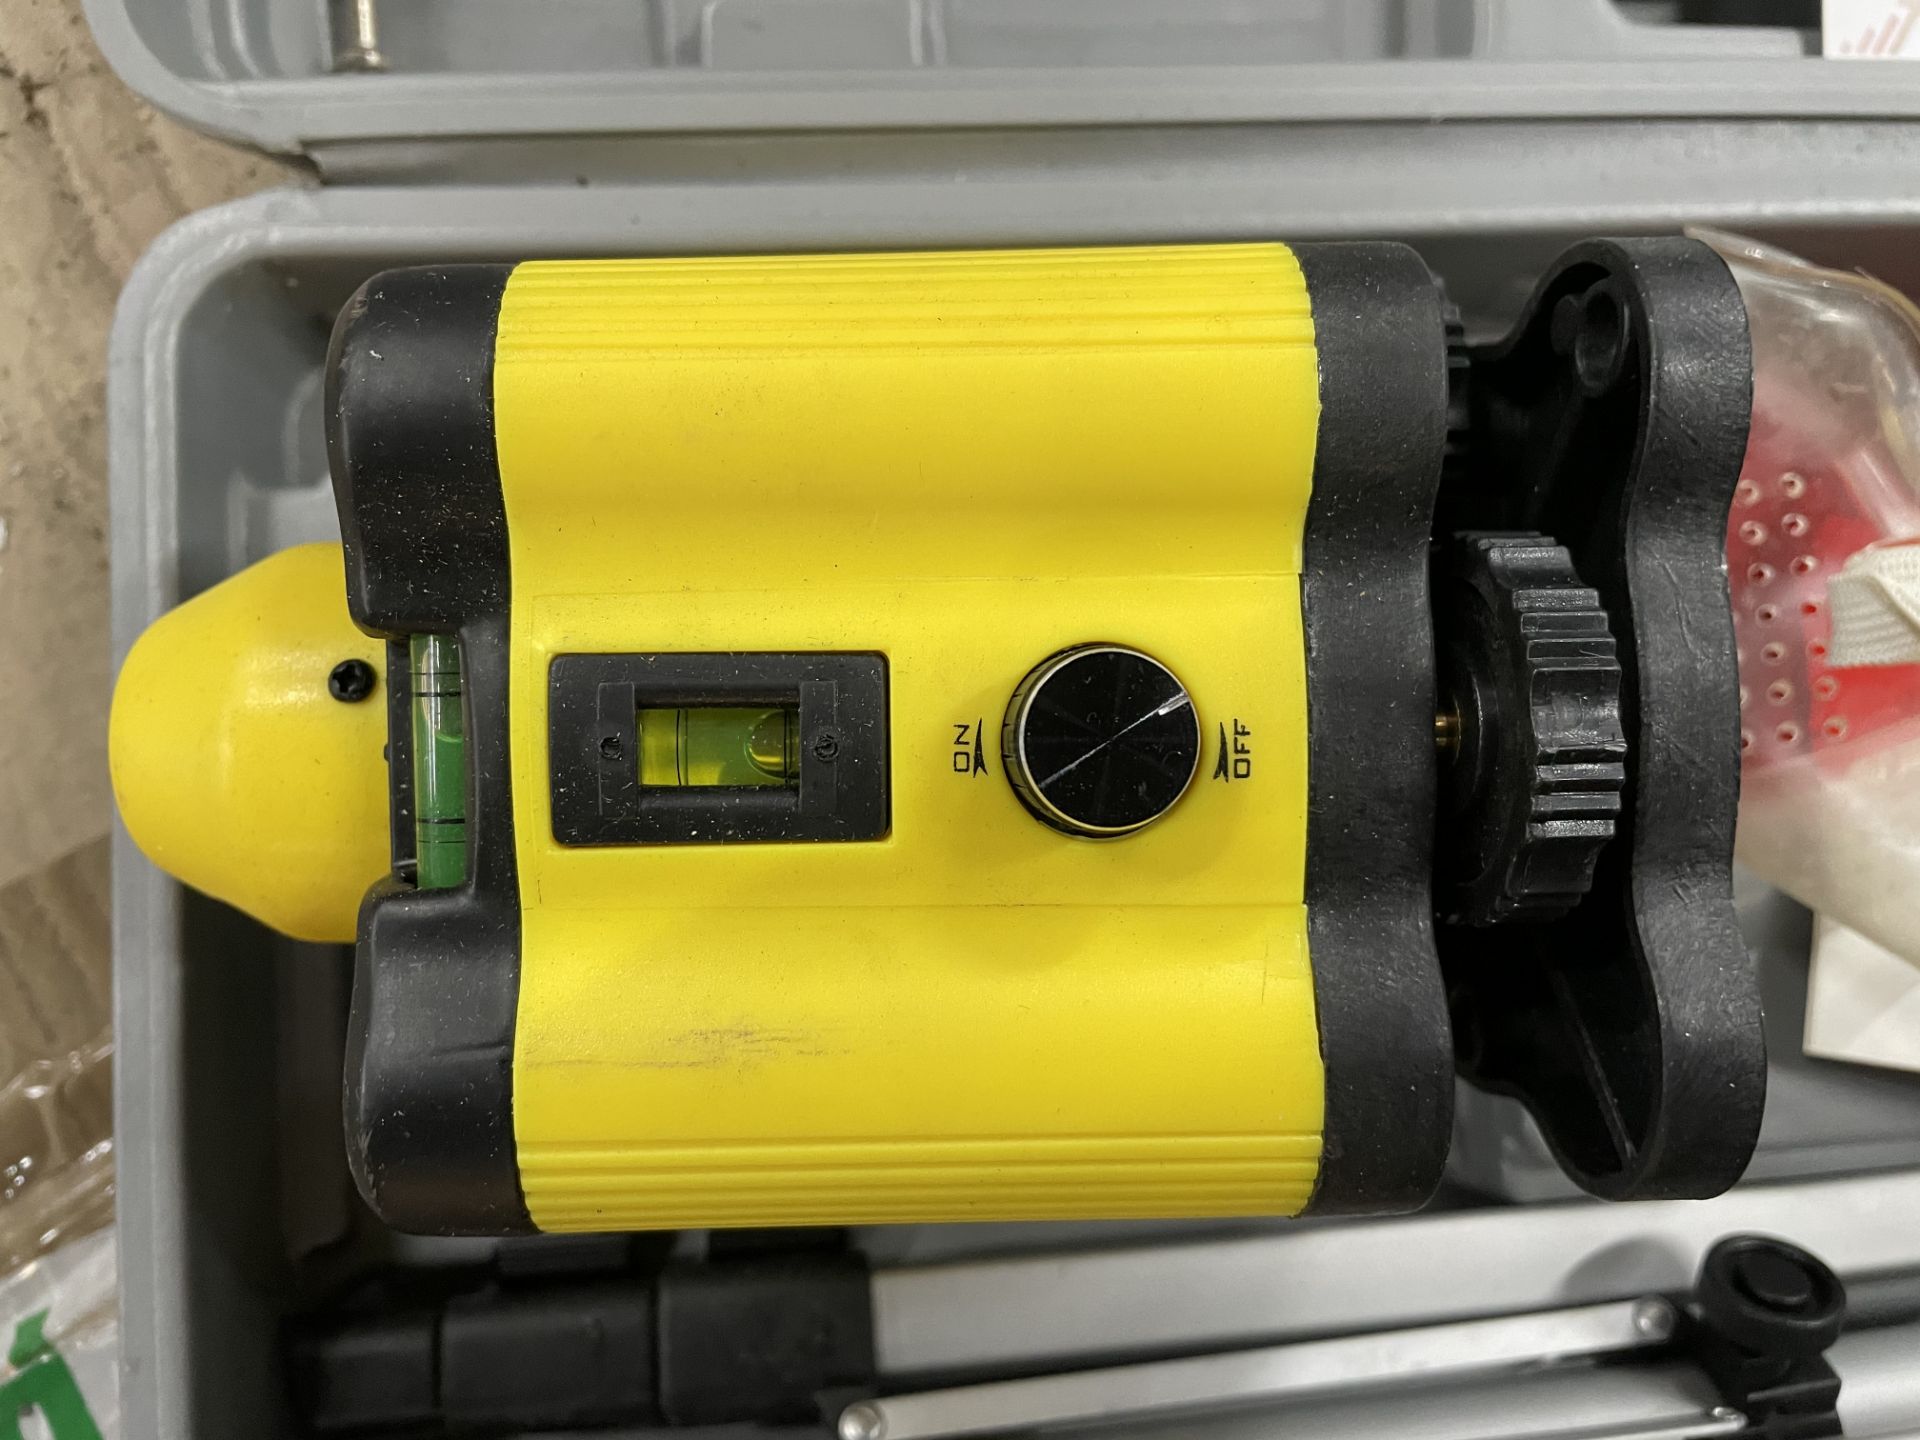 PowerMaster Rotary Laser Level Kit in Case - Image 3 of 3